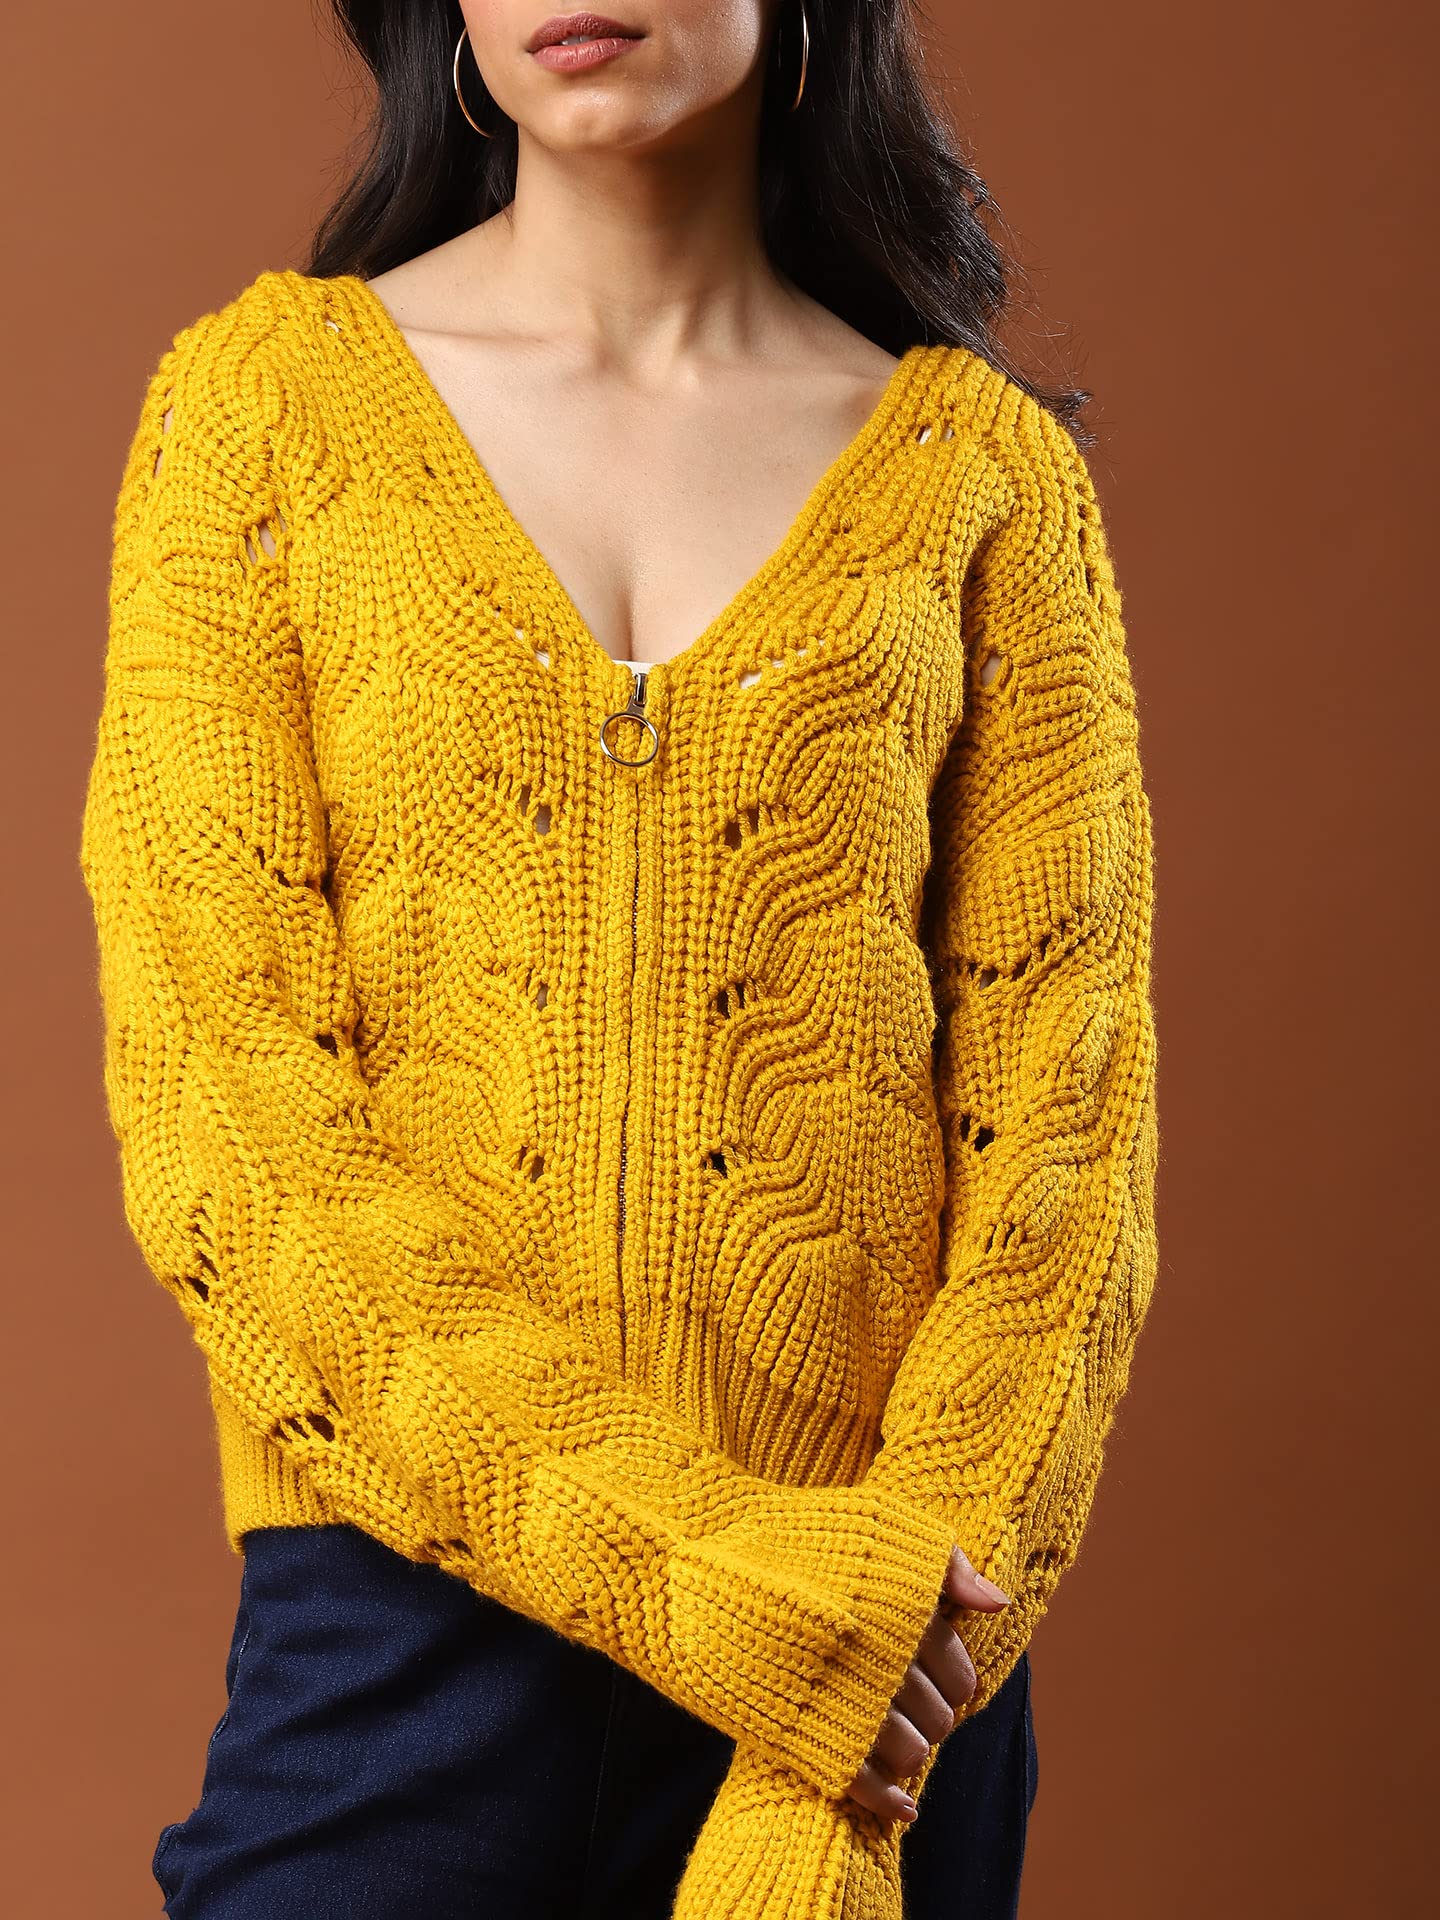 Aarke Ritu Kumar Women's Acrylic V-Neck Sweater SWTHAJ01N30127714-MUSTARD-M Yellow